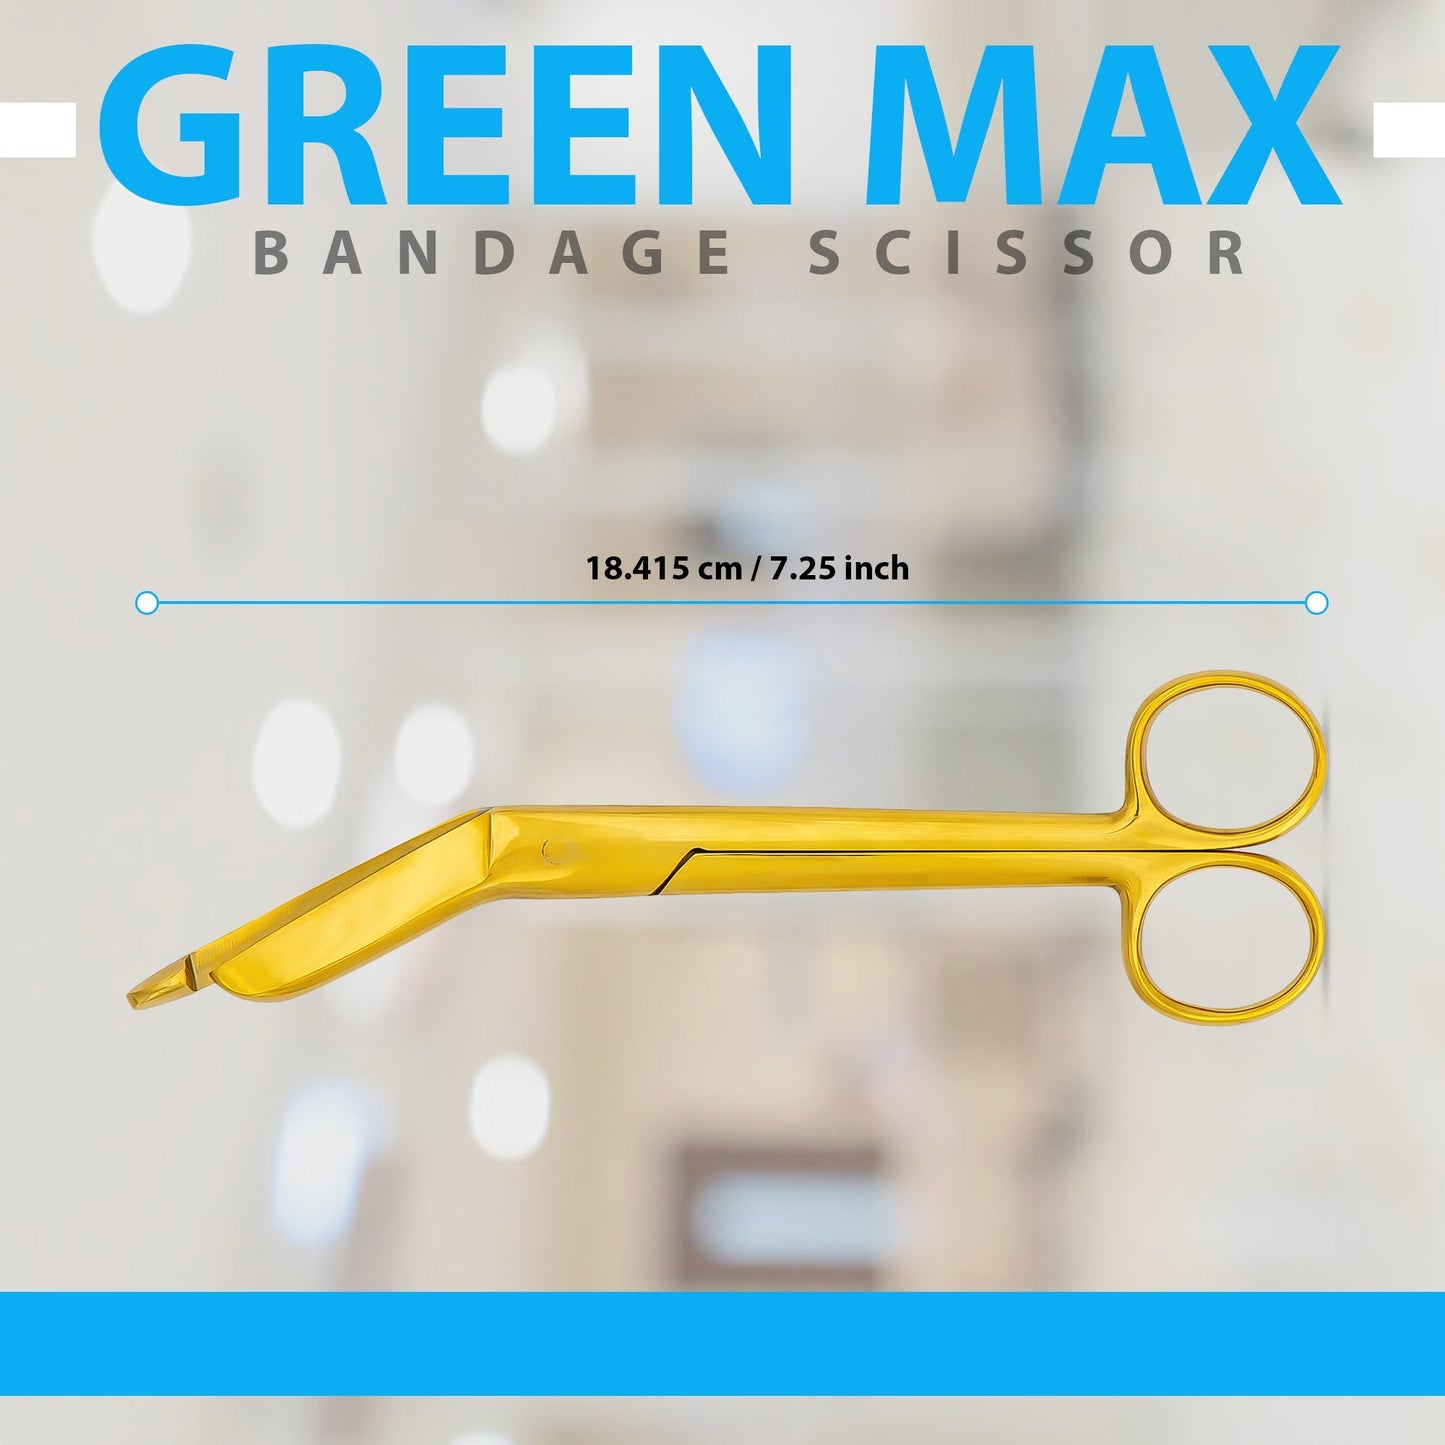 Lister Bandage Scissors, Medical and Nursing Lister Bandage Shears 7.25”